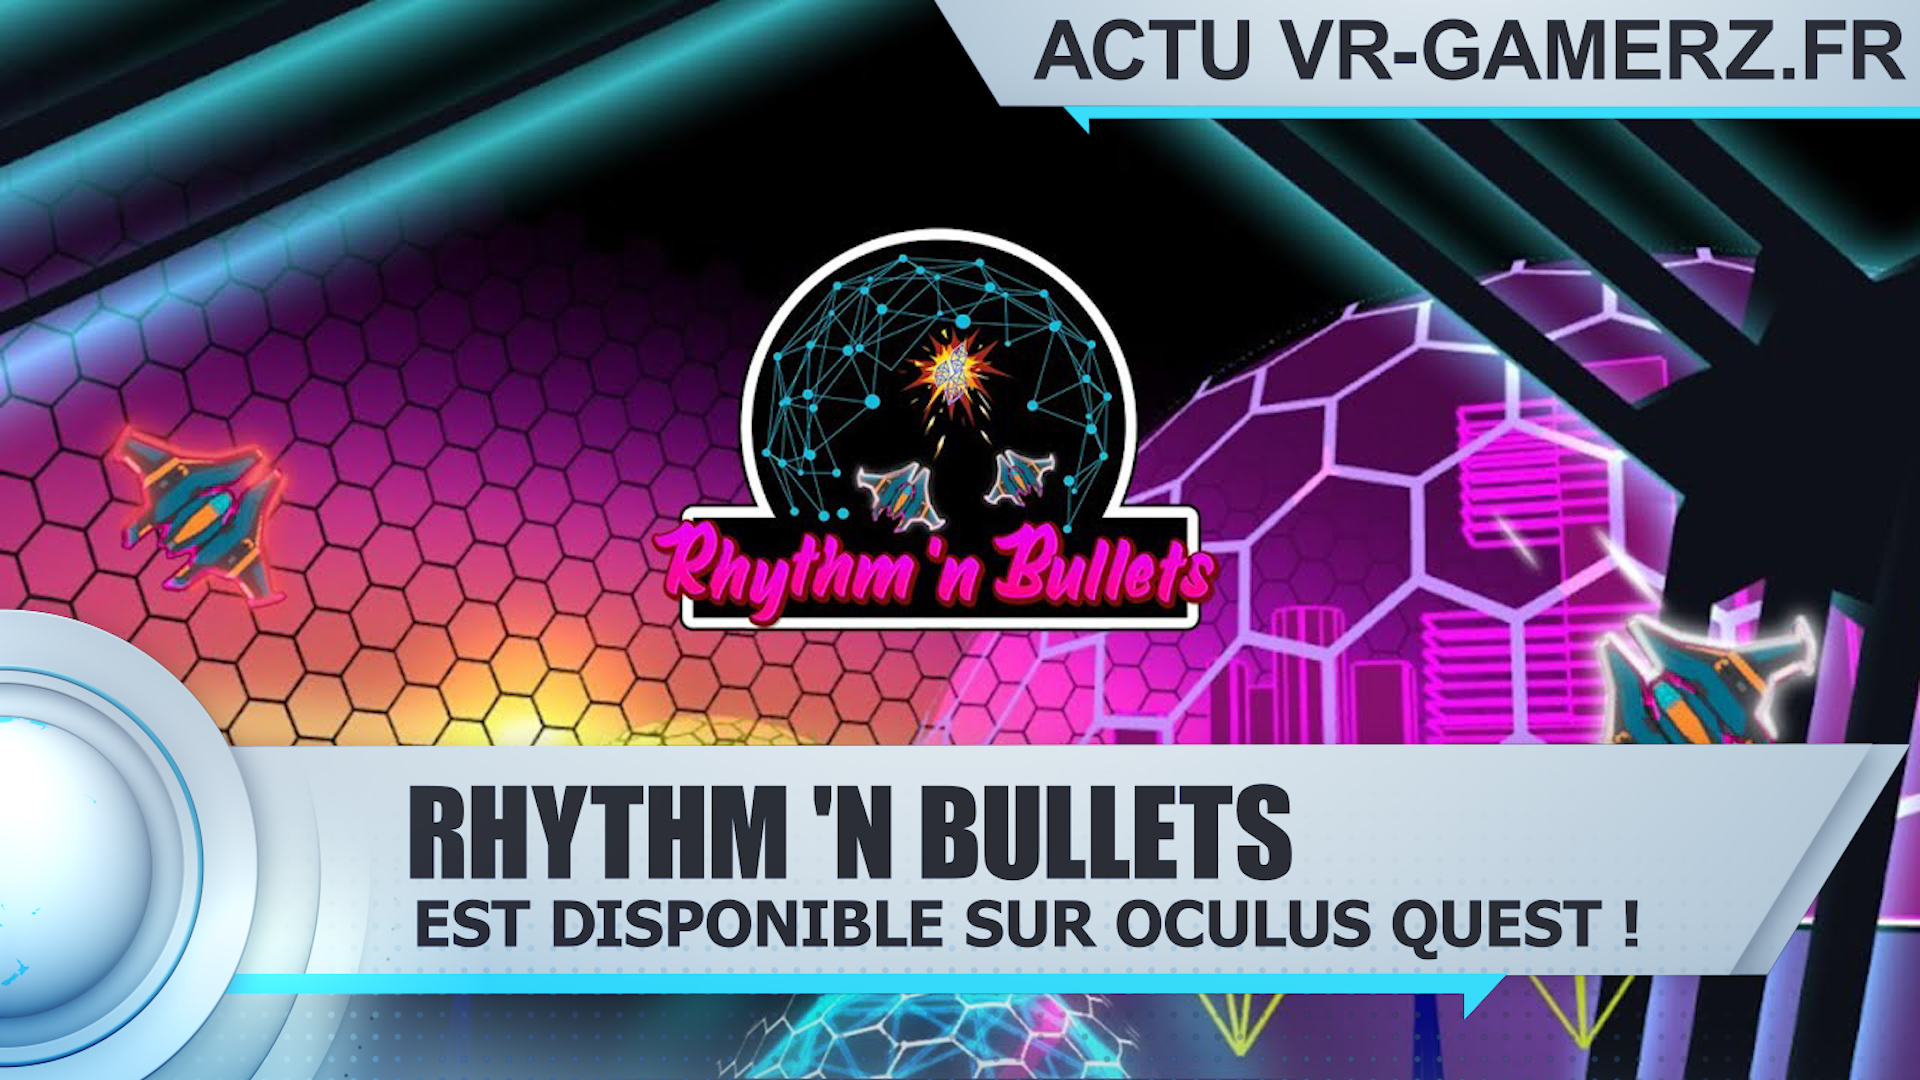 Rhythm ‘n Bullets prend son envol sur Oculus quest !